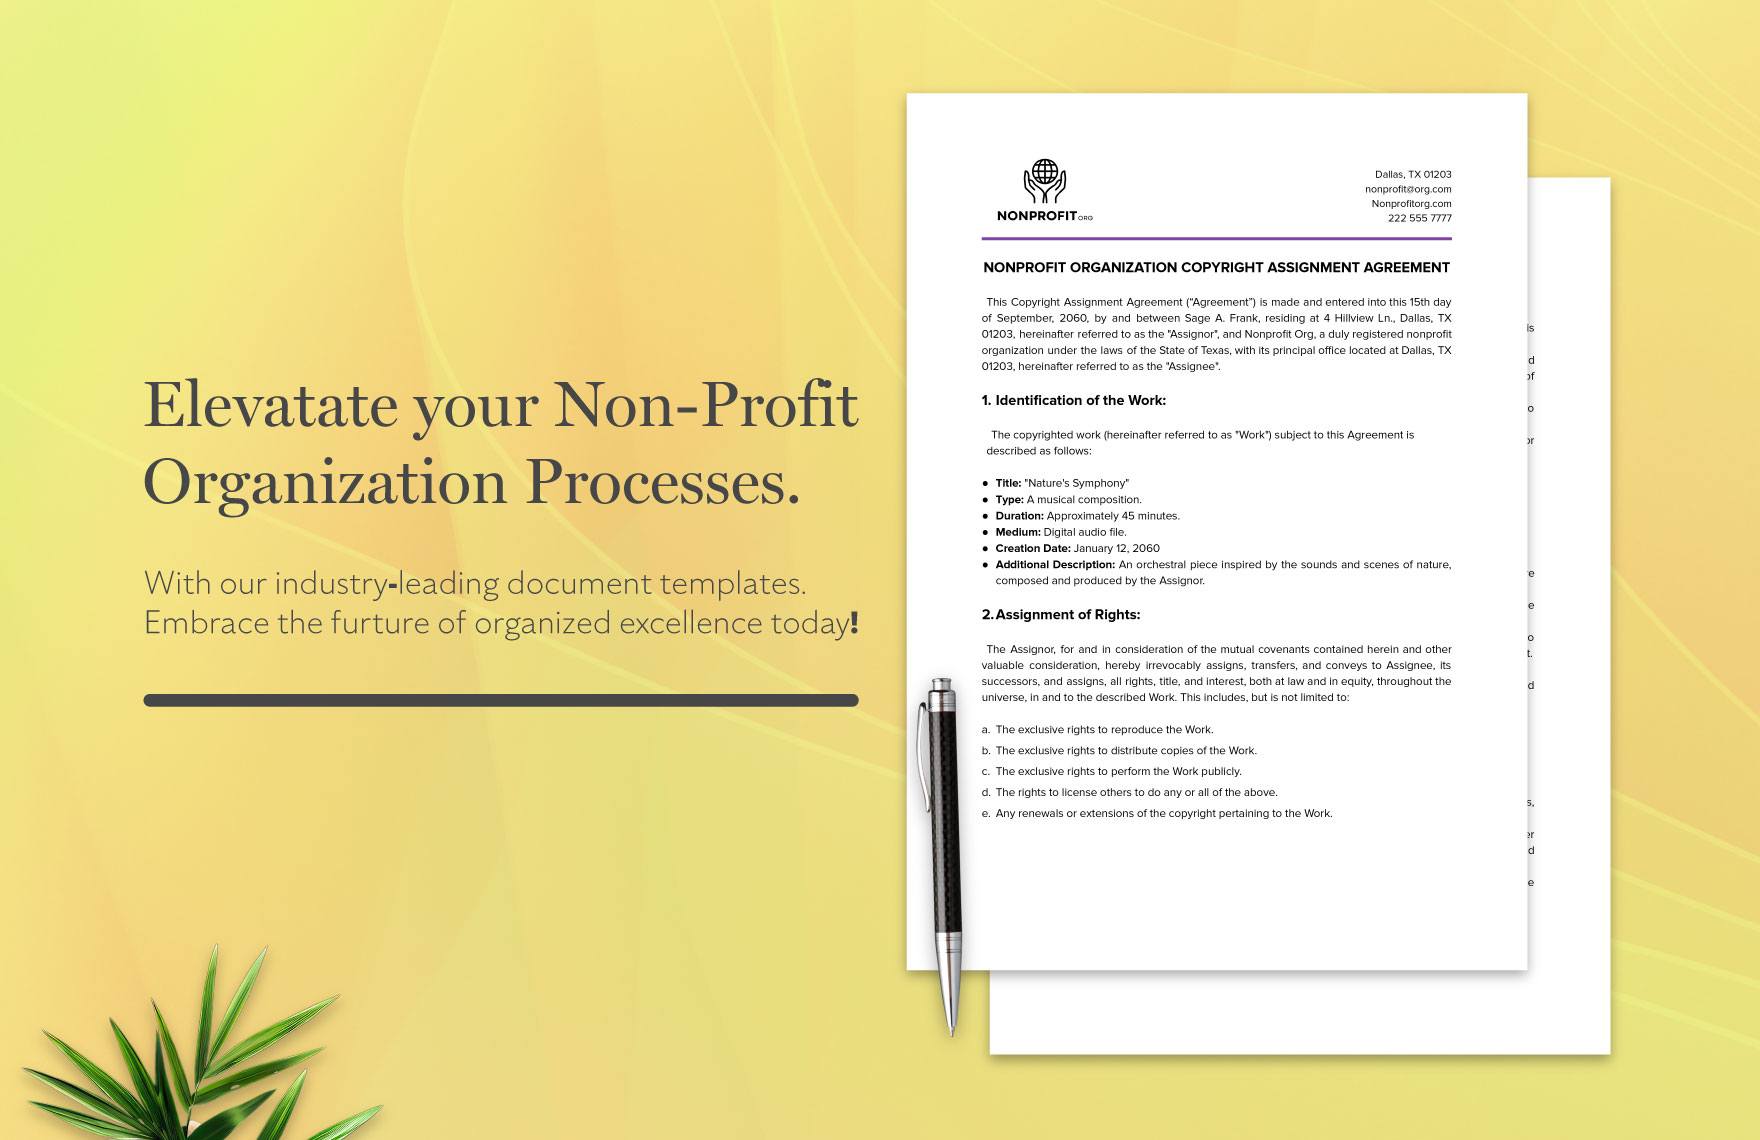  Nonprofit Organization Copyright Assignment Agreement Template